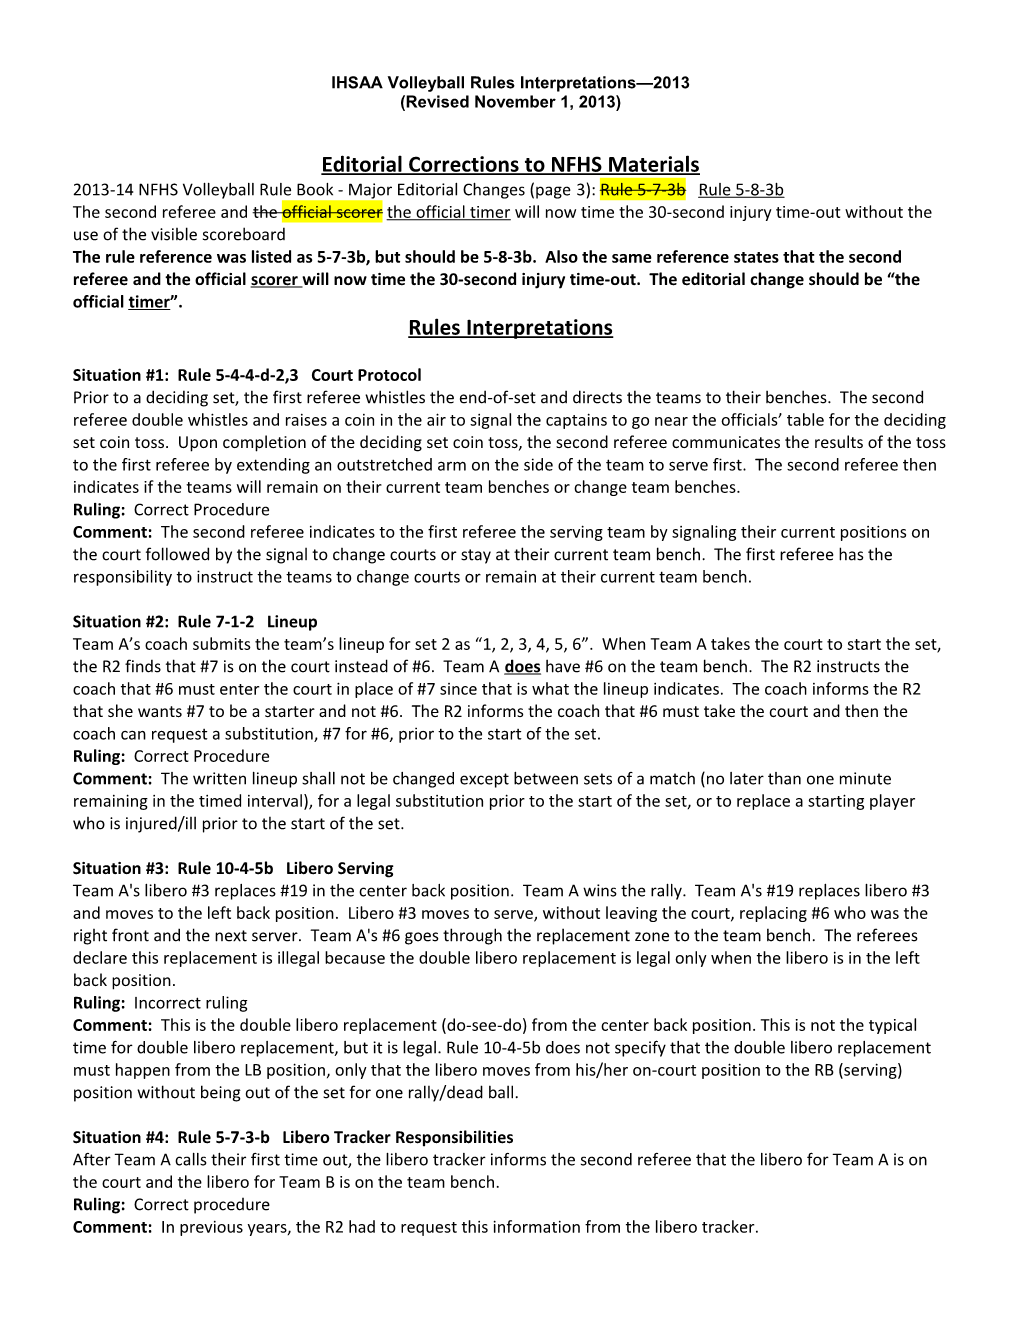 IHSAA Volleyball Rules Interpretations 2011